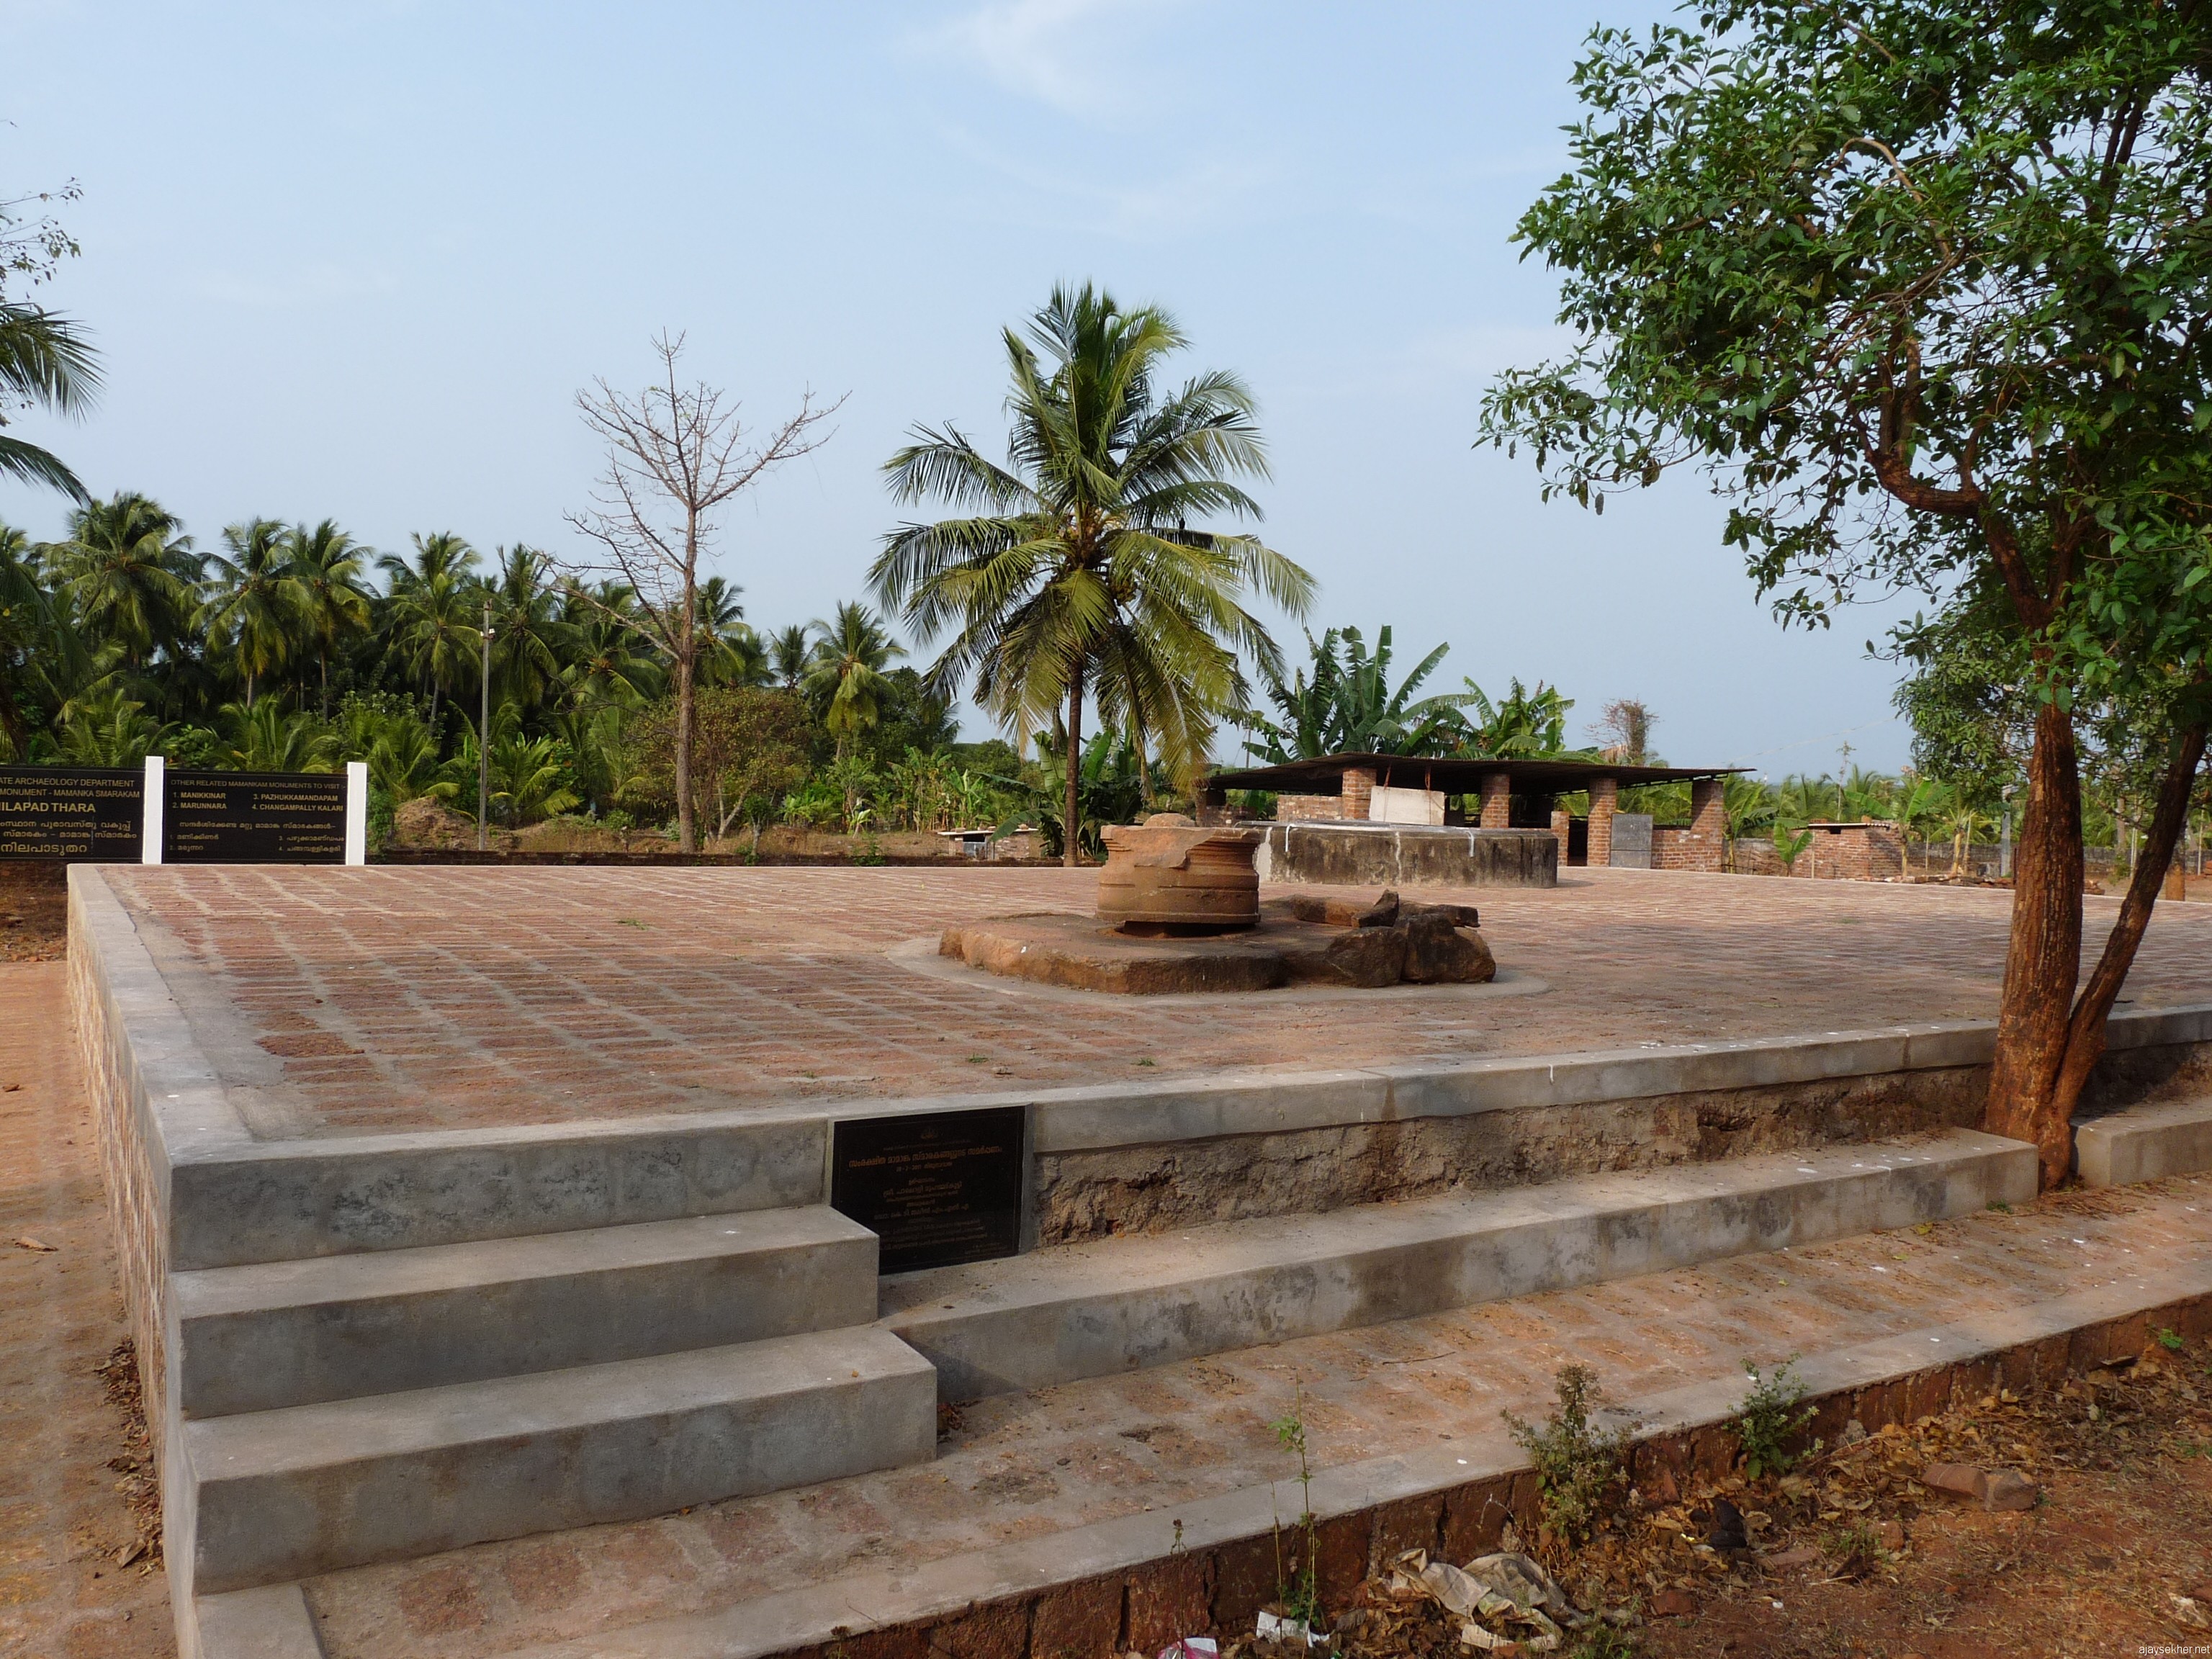 Nilapadu Thara: vantage used by the Konathiries and Zamorins